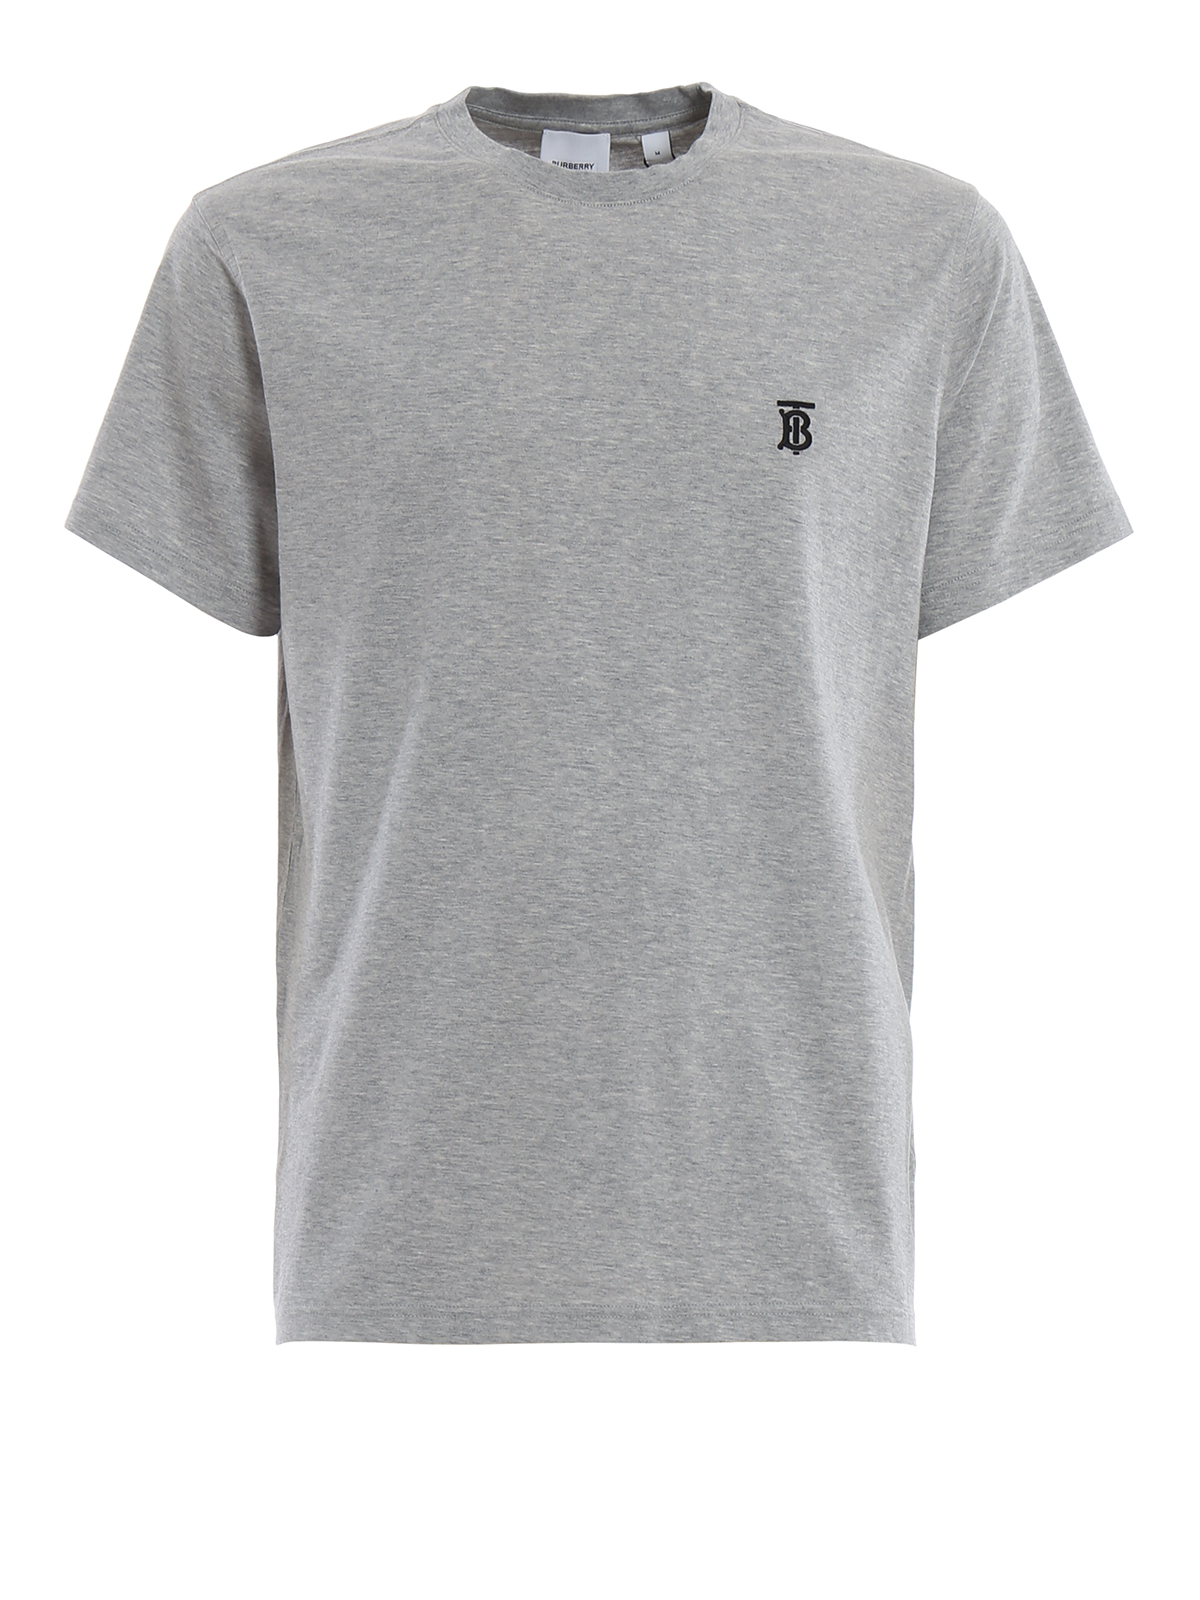 T-shirts Burberry - Parker grey T-shirt - 8014023 | Shop online at iKRIX